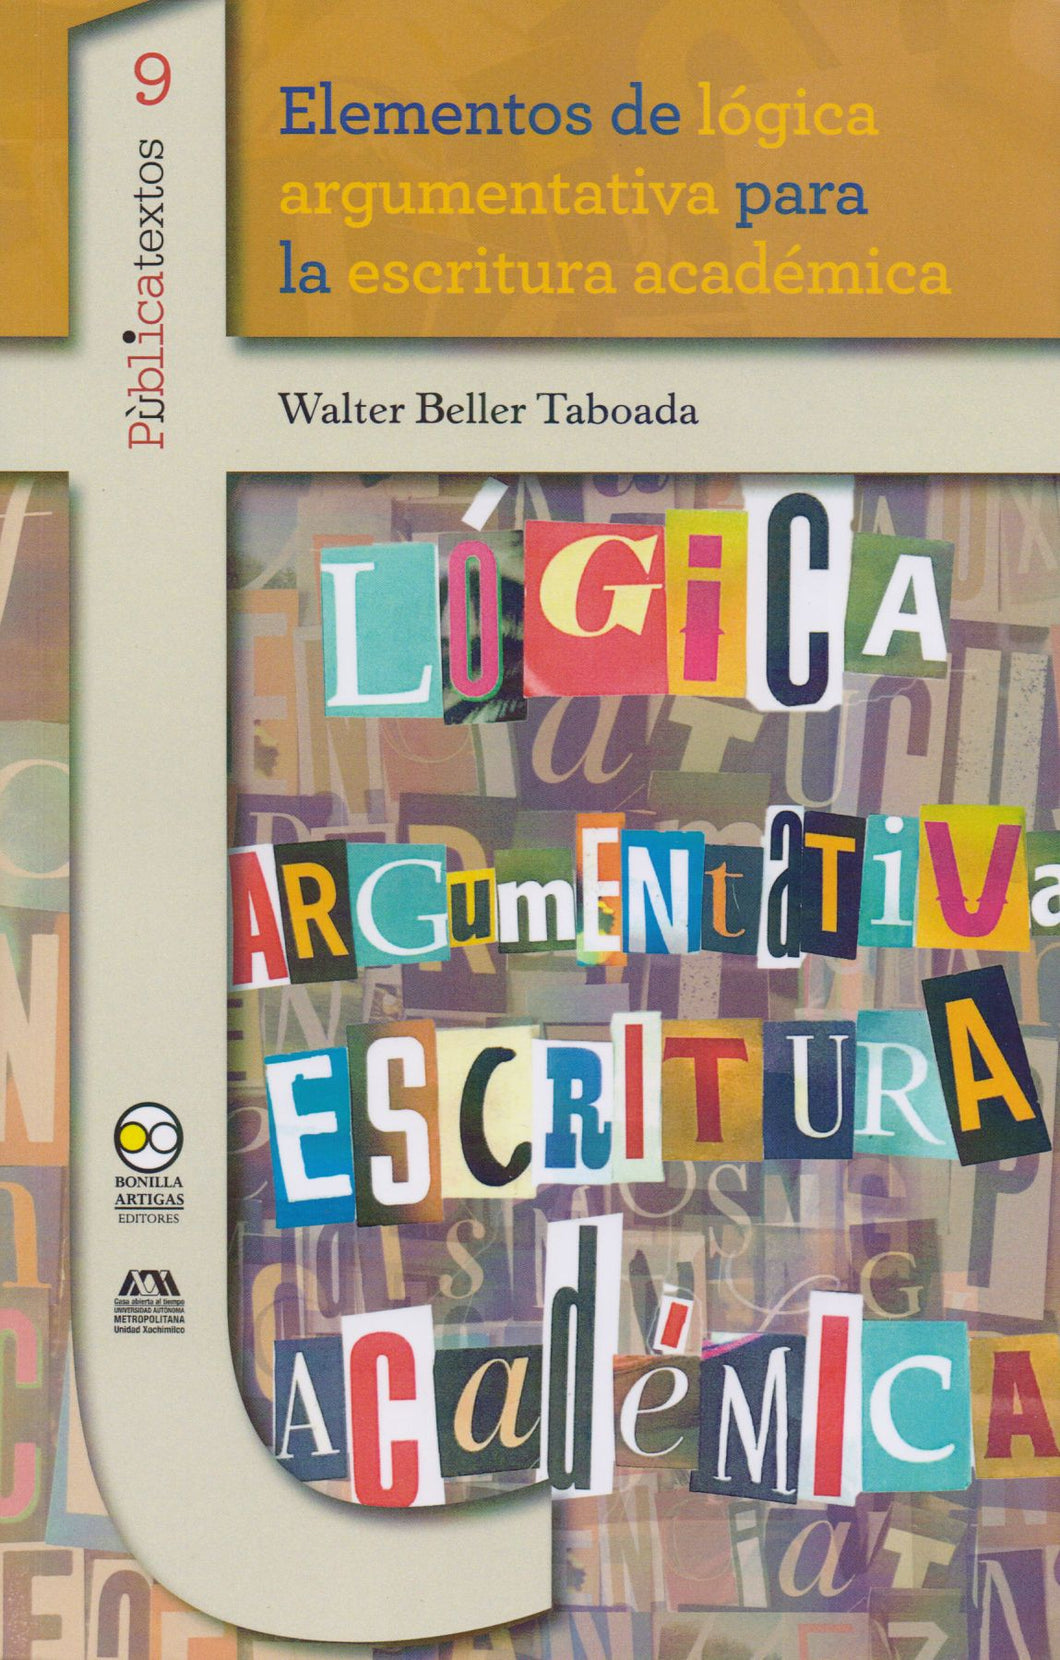 Elementos de lógica argumentativa para la escritura académica - Walter Beller Taboada